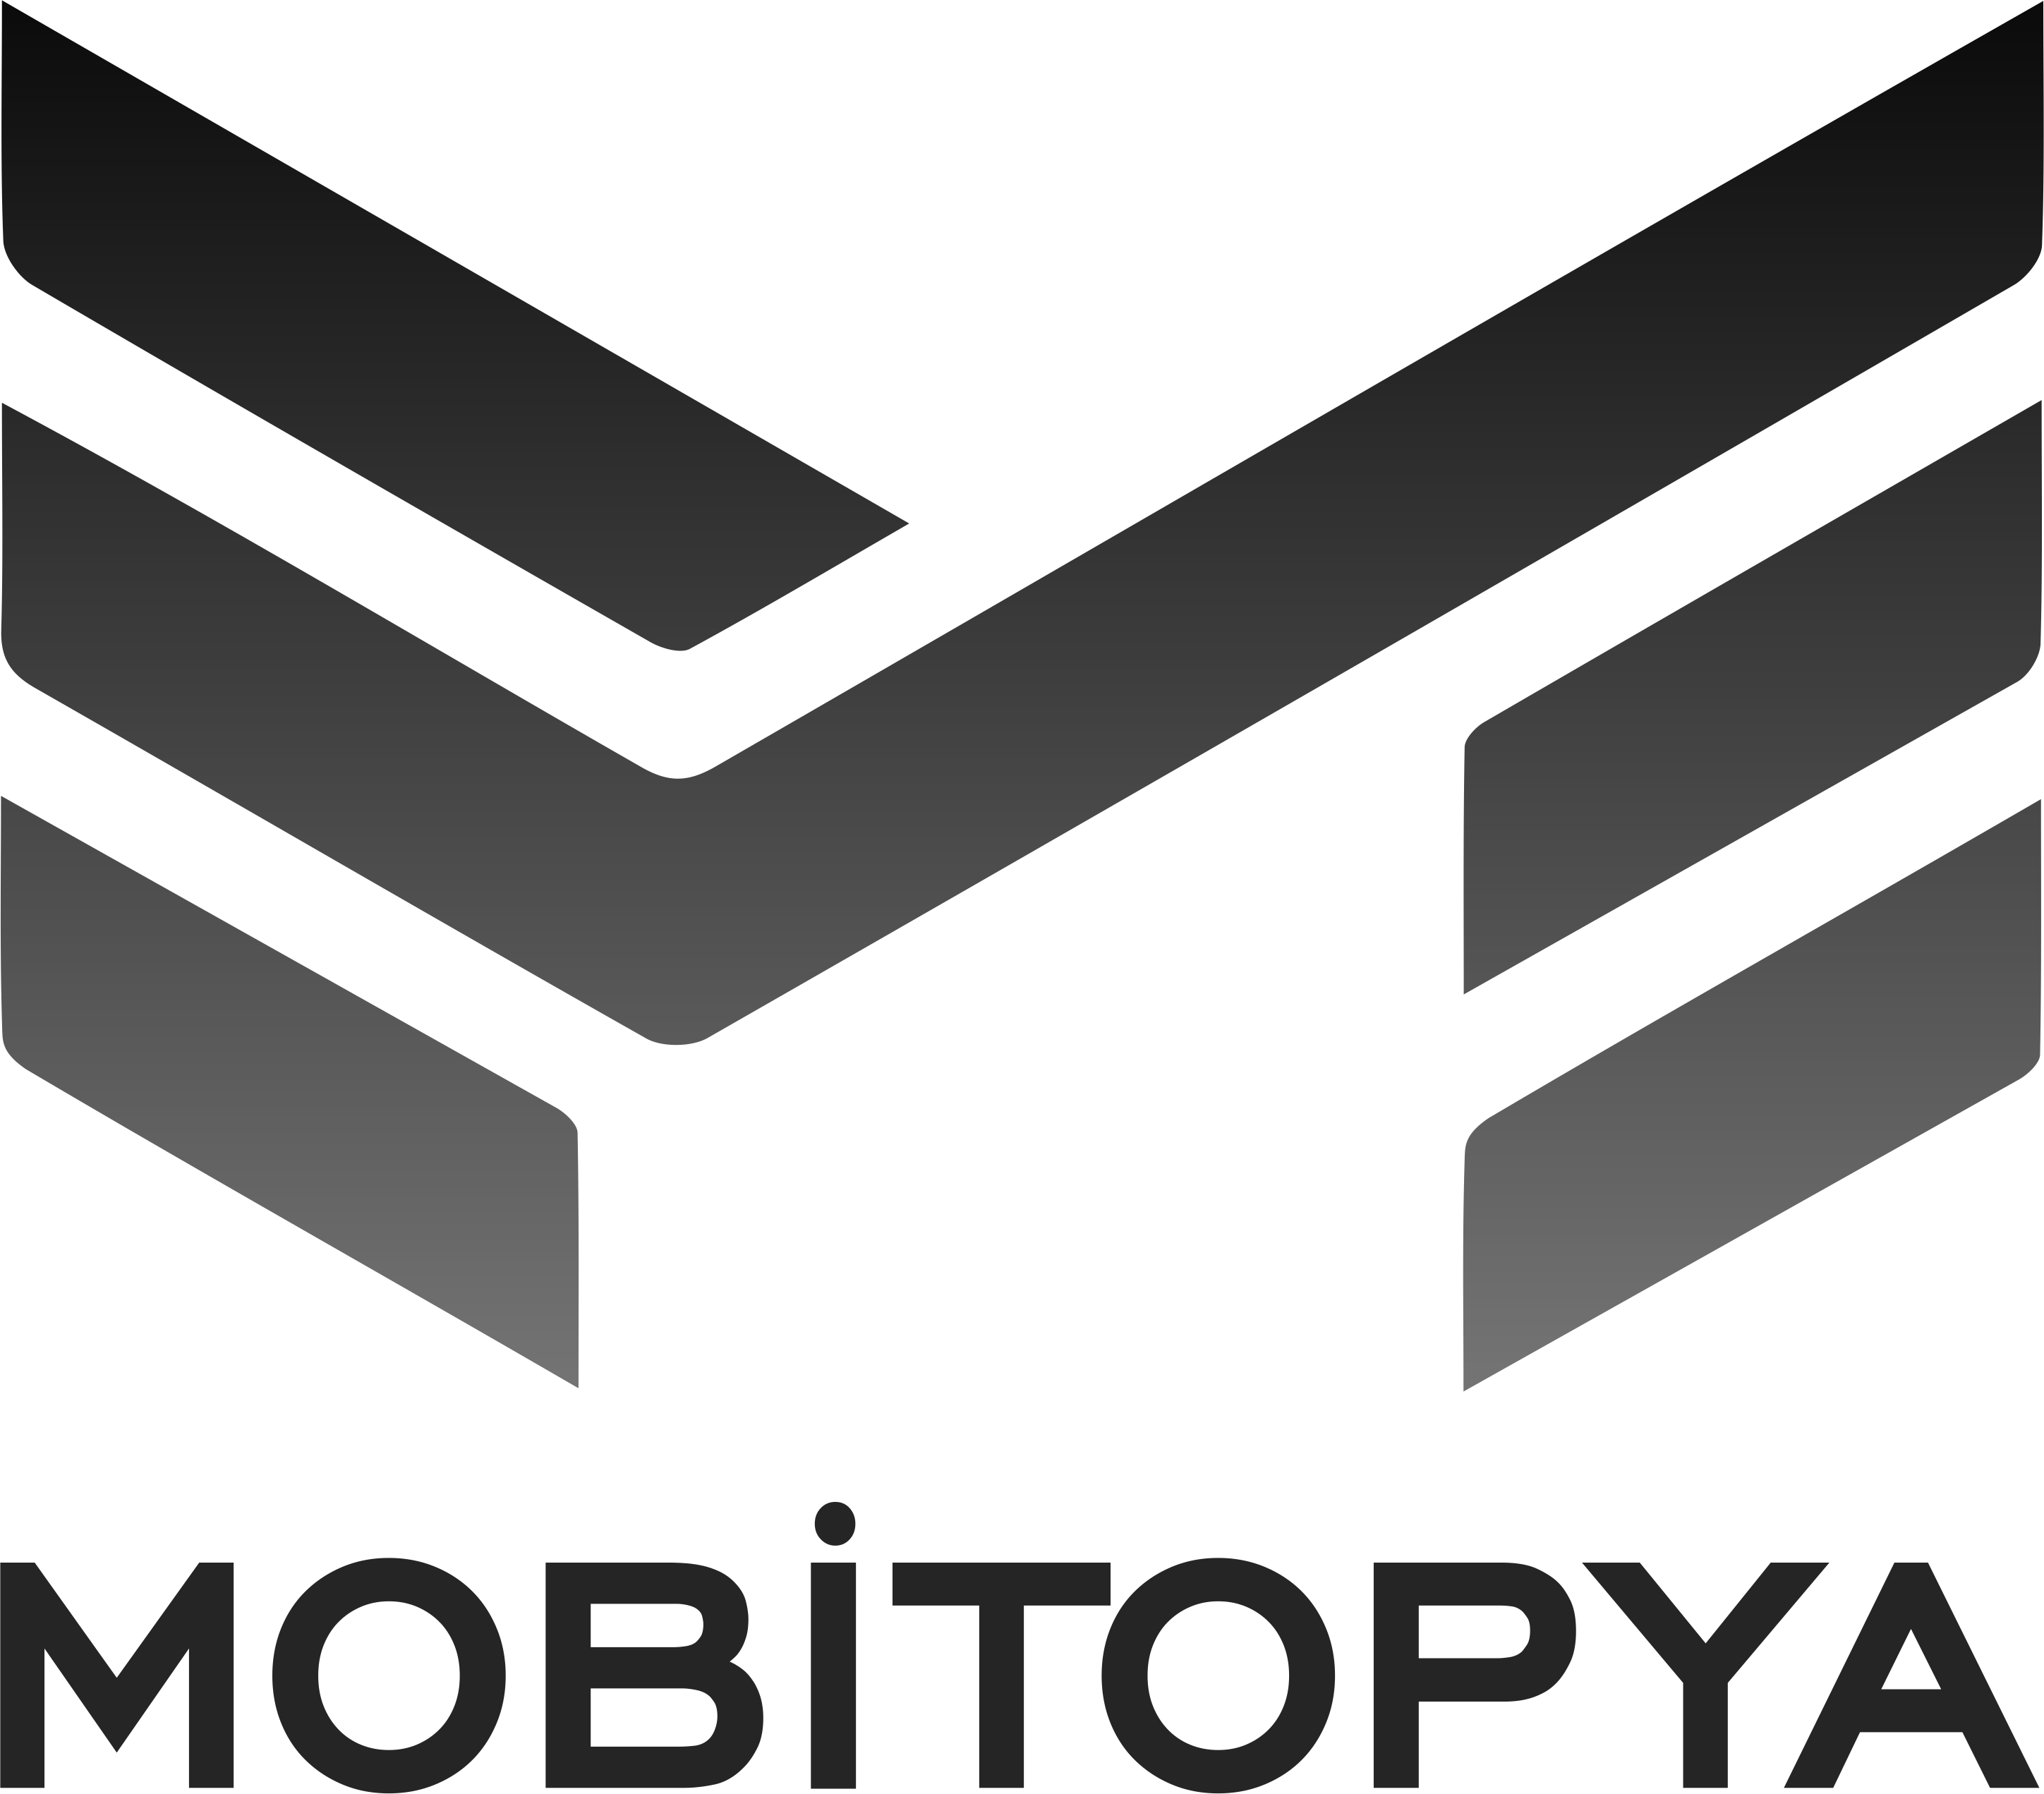 Mobitopya